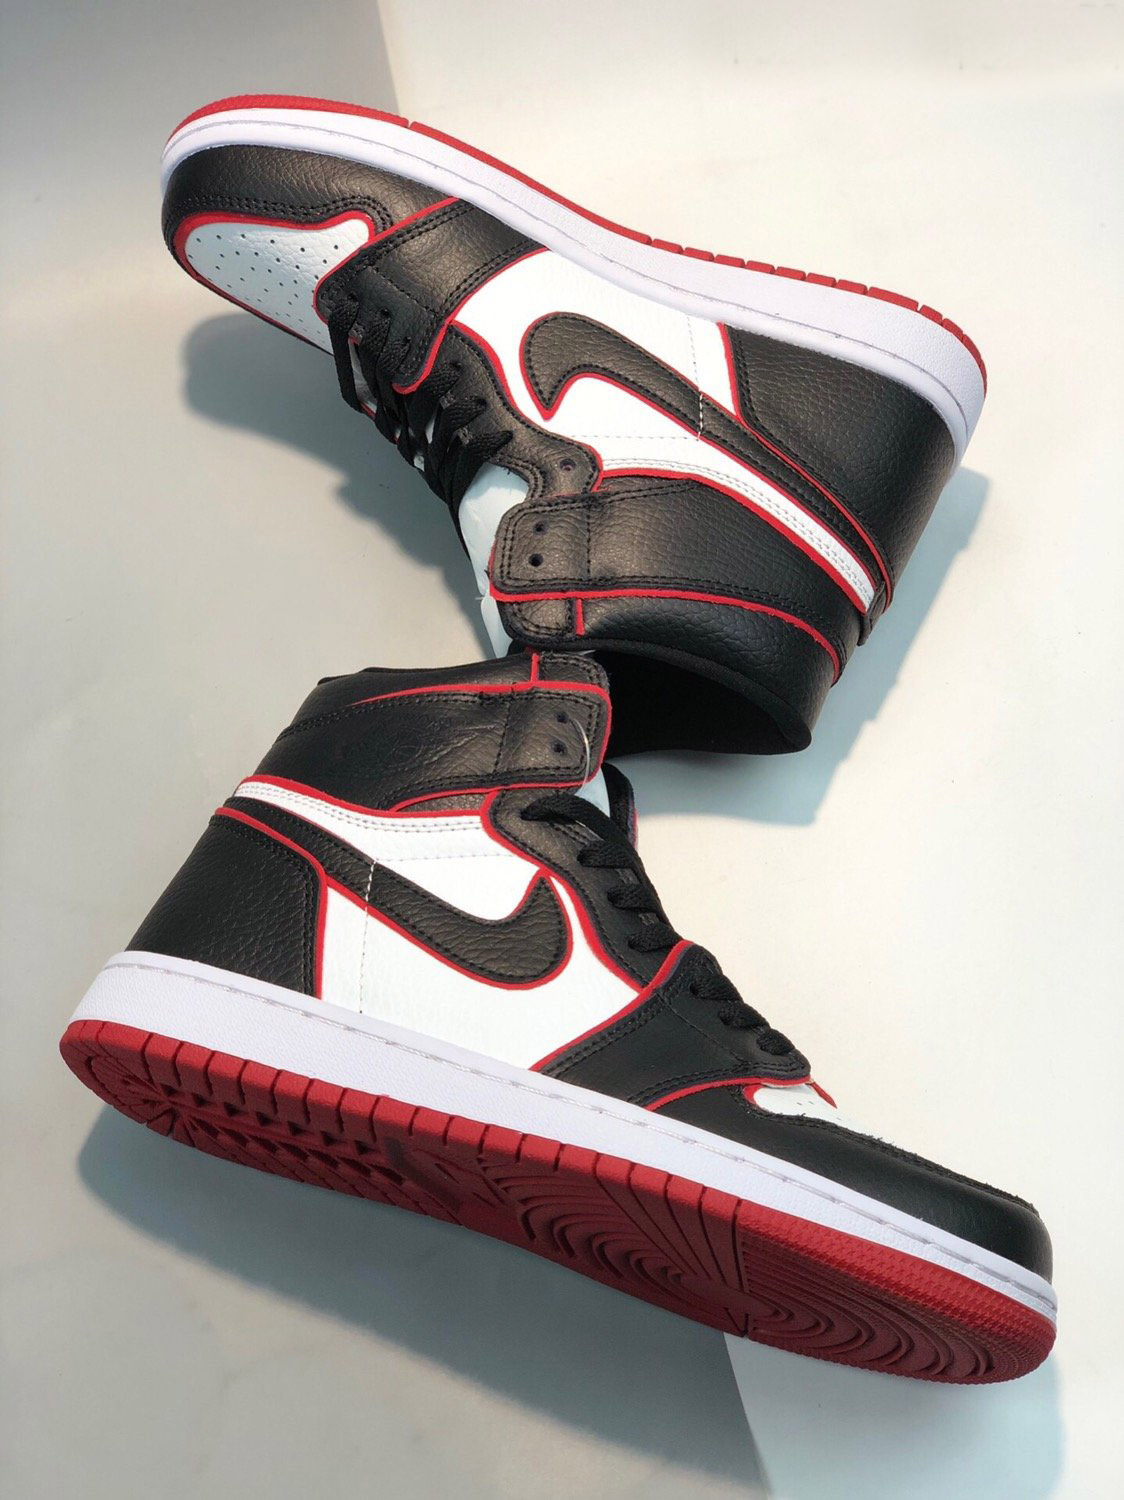 Air Jordan 1 High OG “Bloodline” Black/Gym Red-White For Sale – Sneaker ...